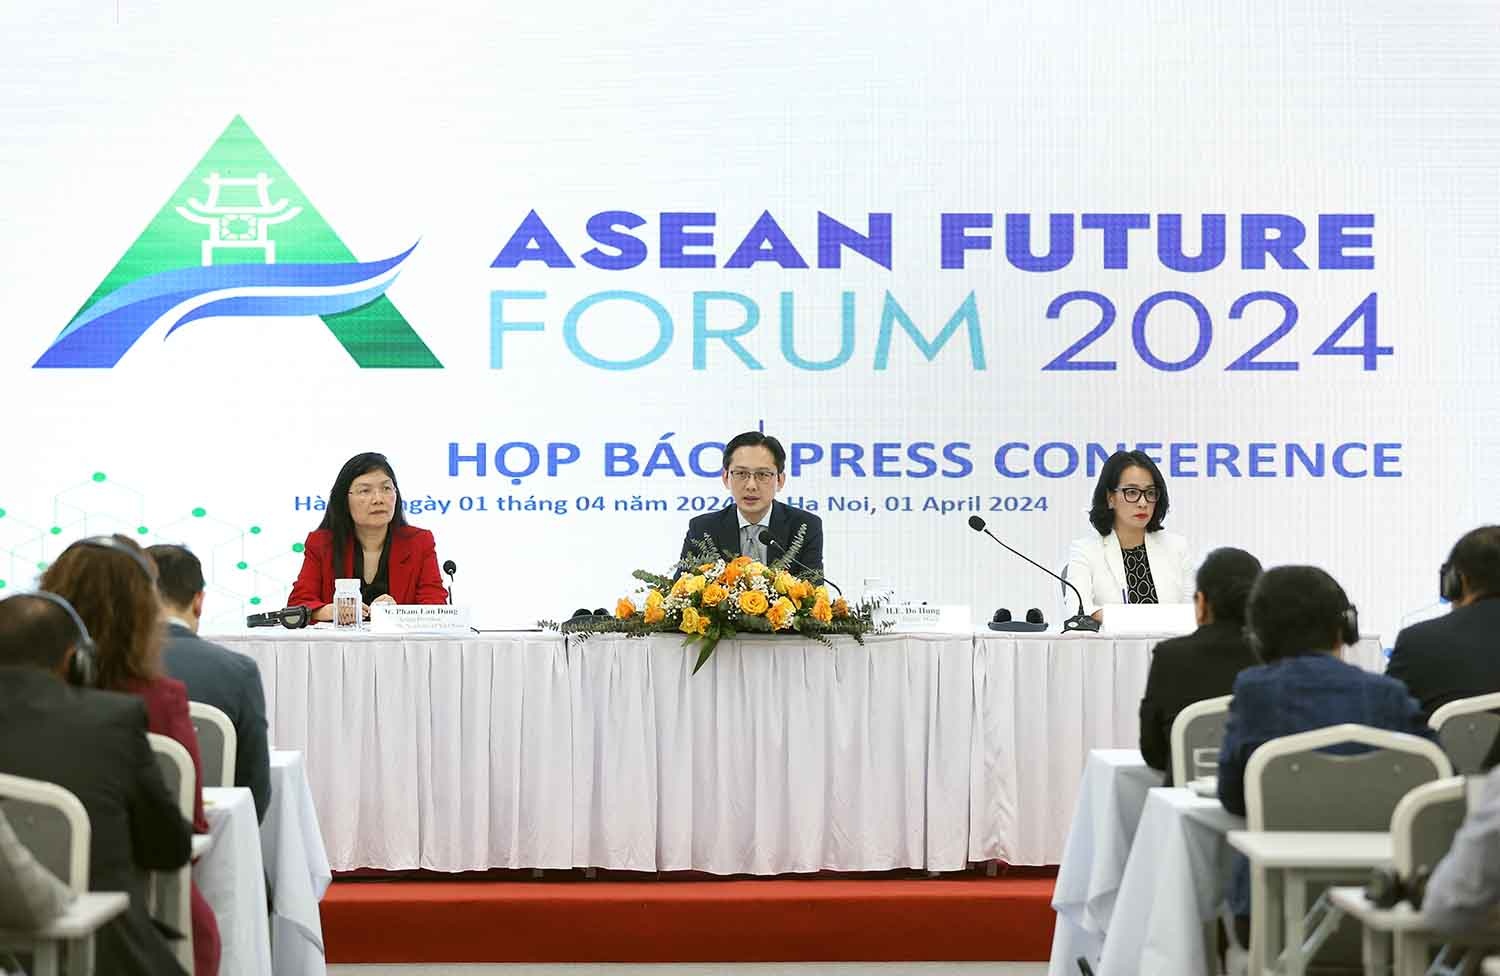 ASEAN Future Forum 2024 set for late April